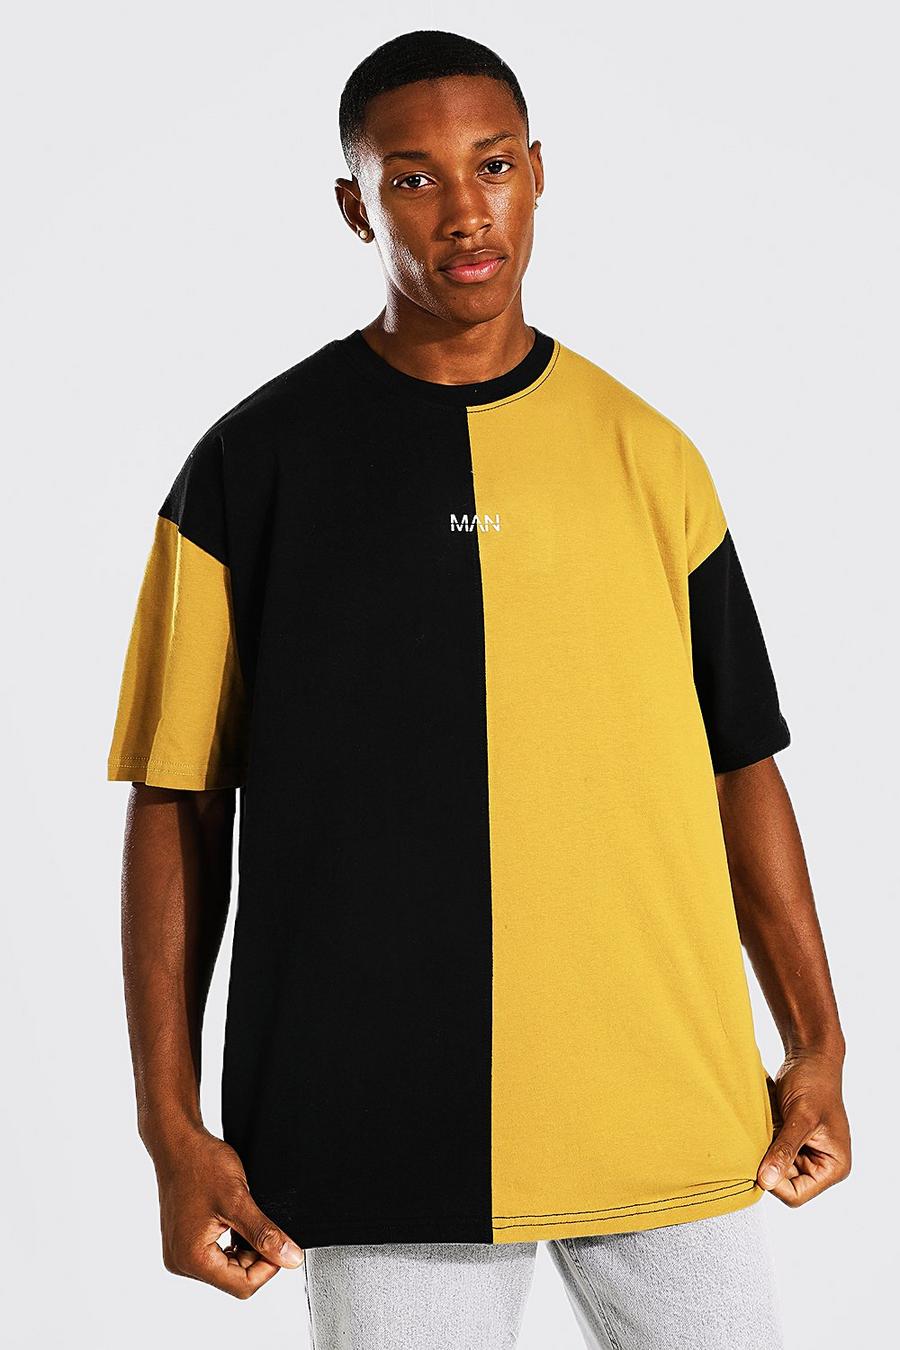 Mustard gelb Oversized Original Man Colour Block T-shirt